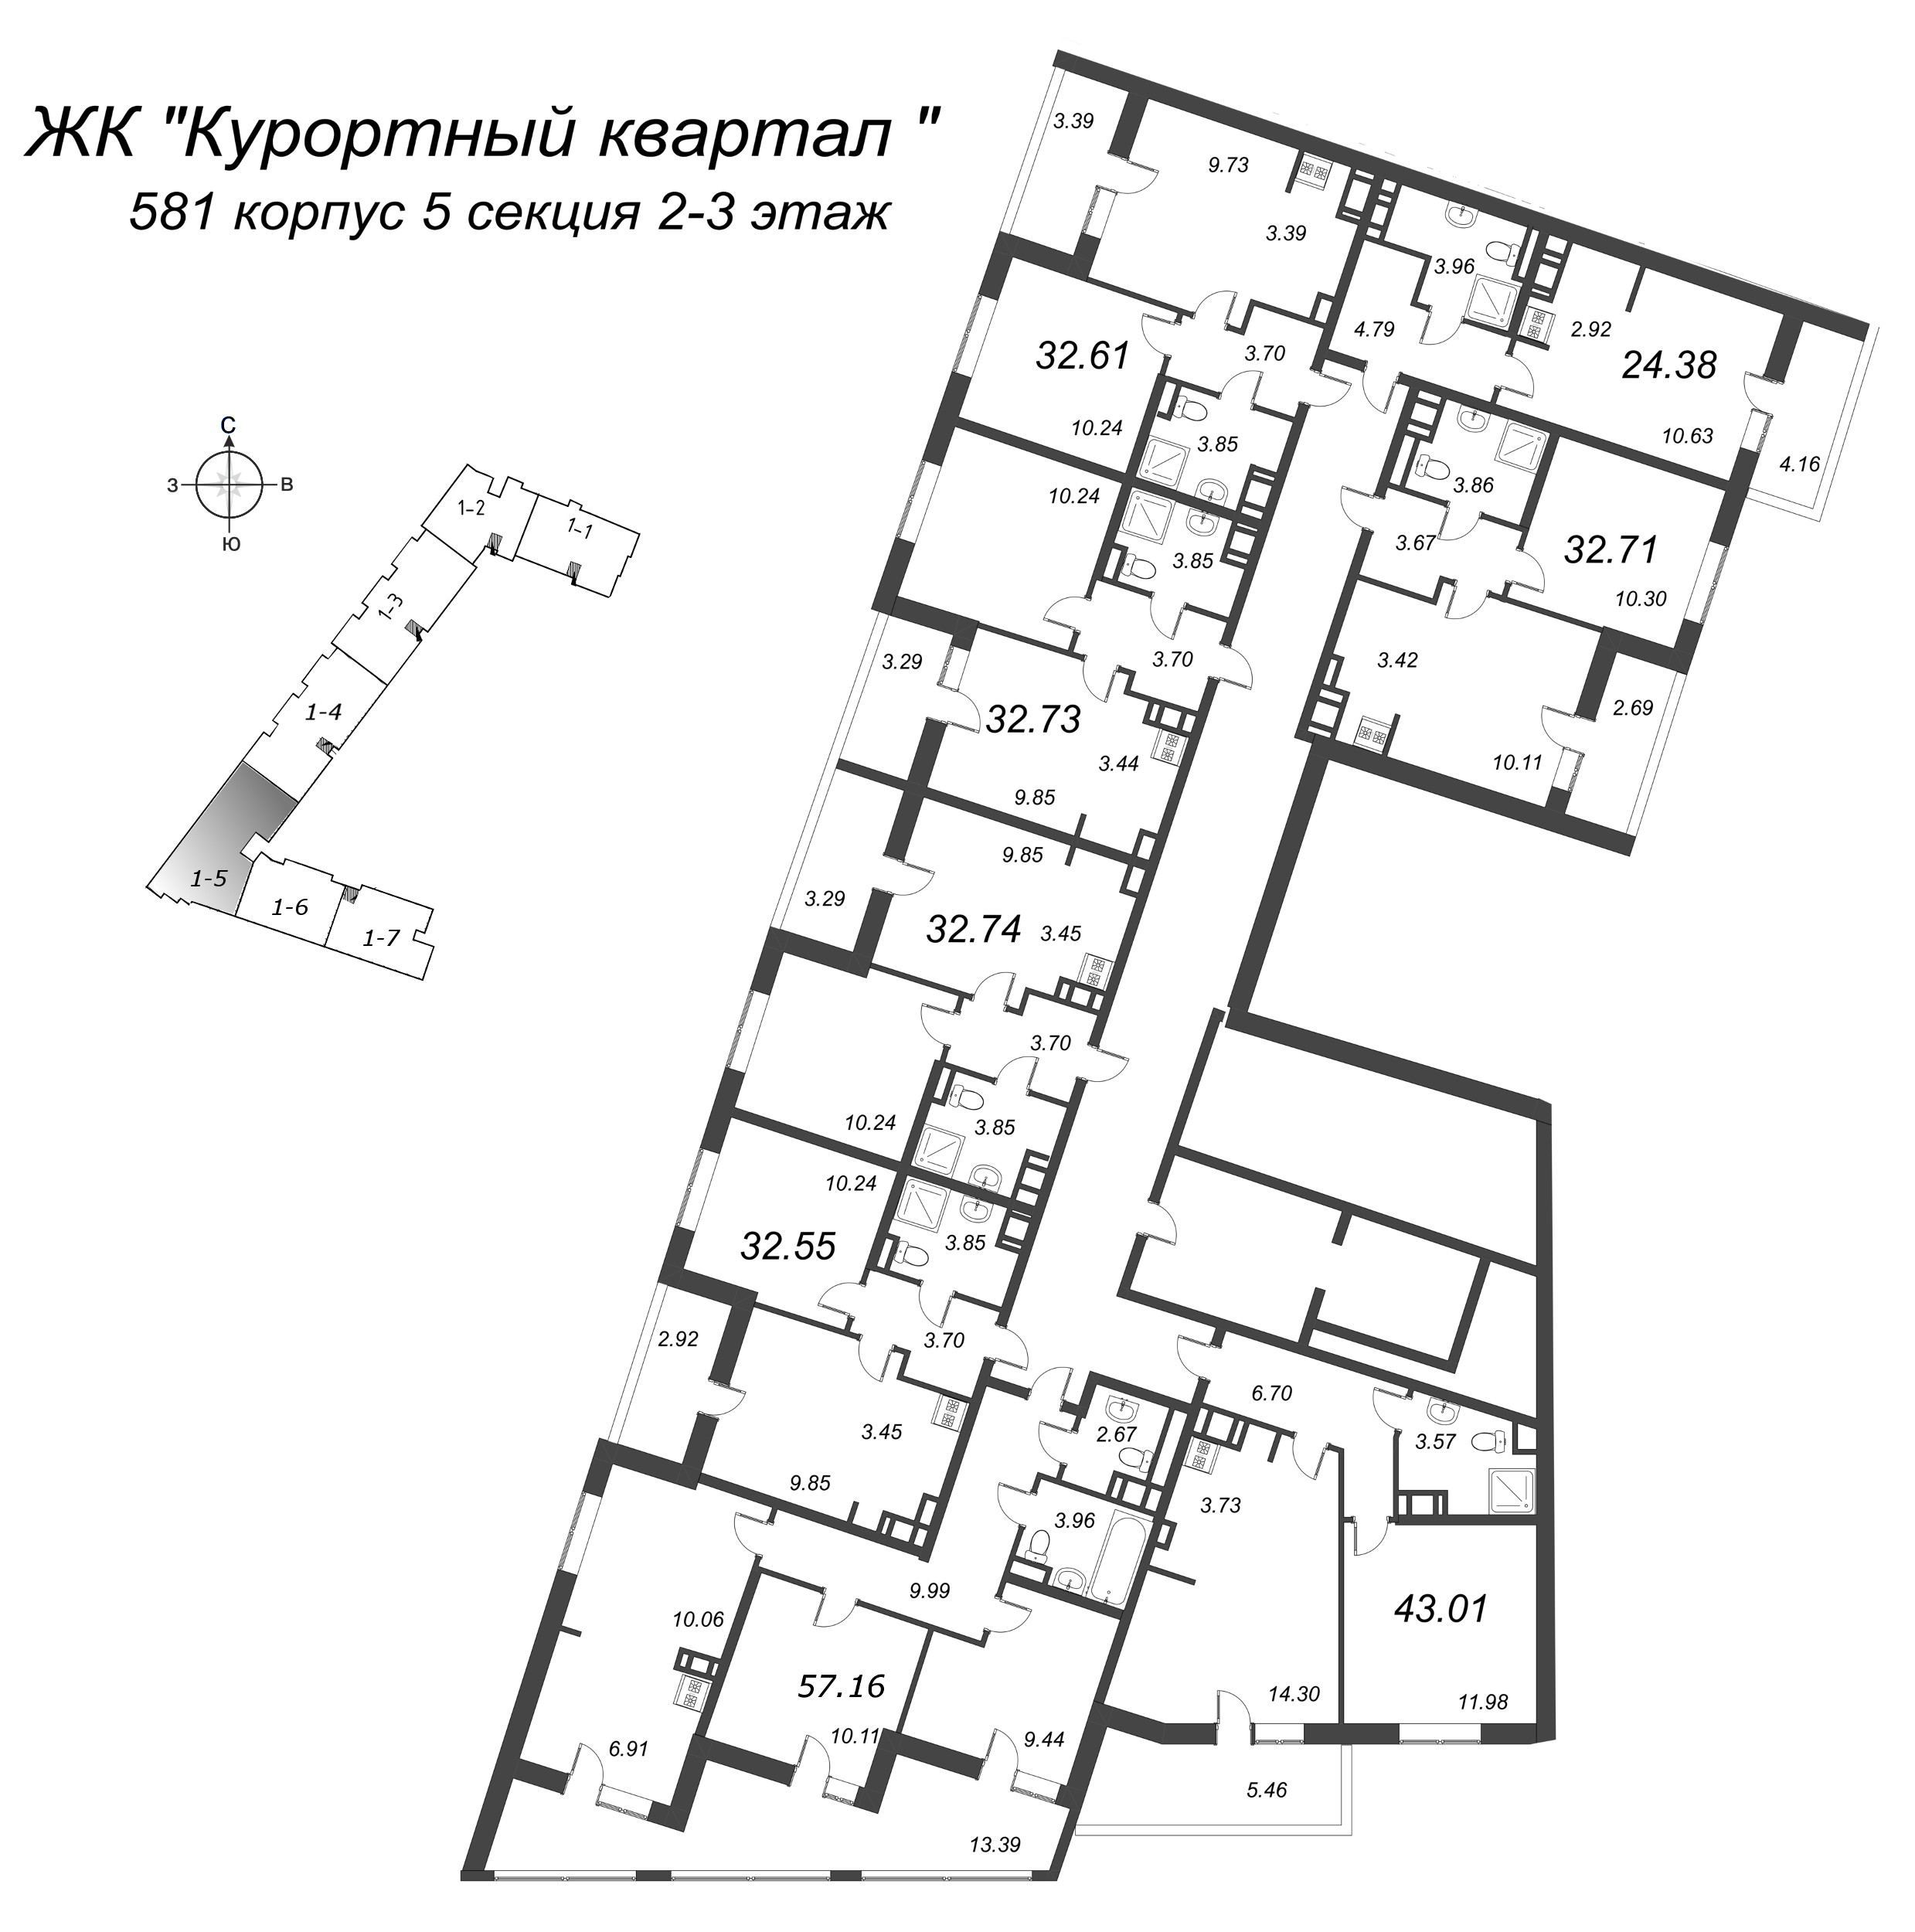 3-комнатная (Евро) квартира, 57.16 м² - планировка этажа